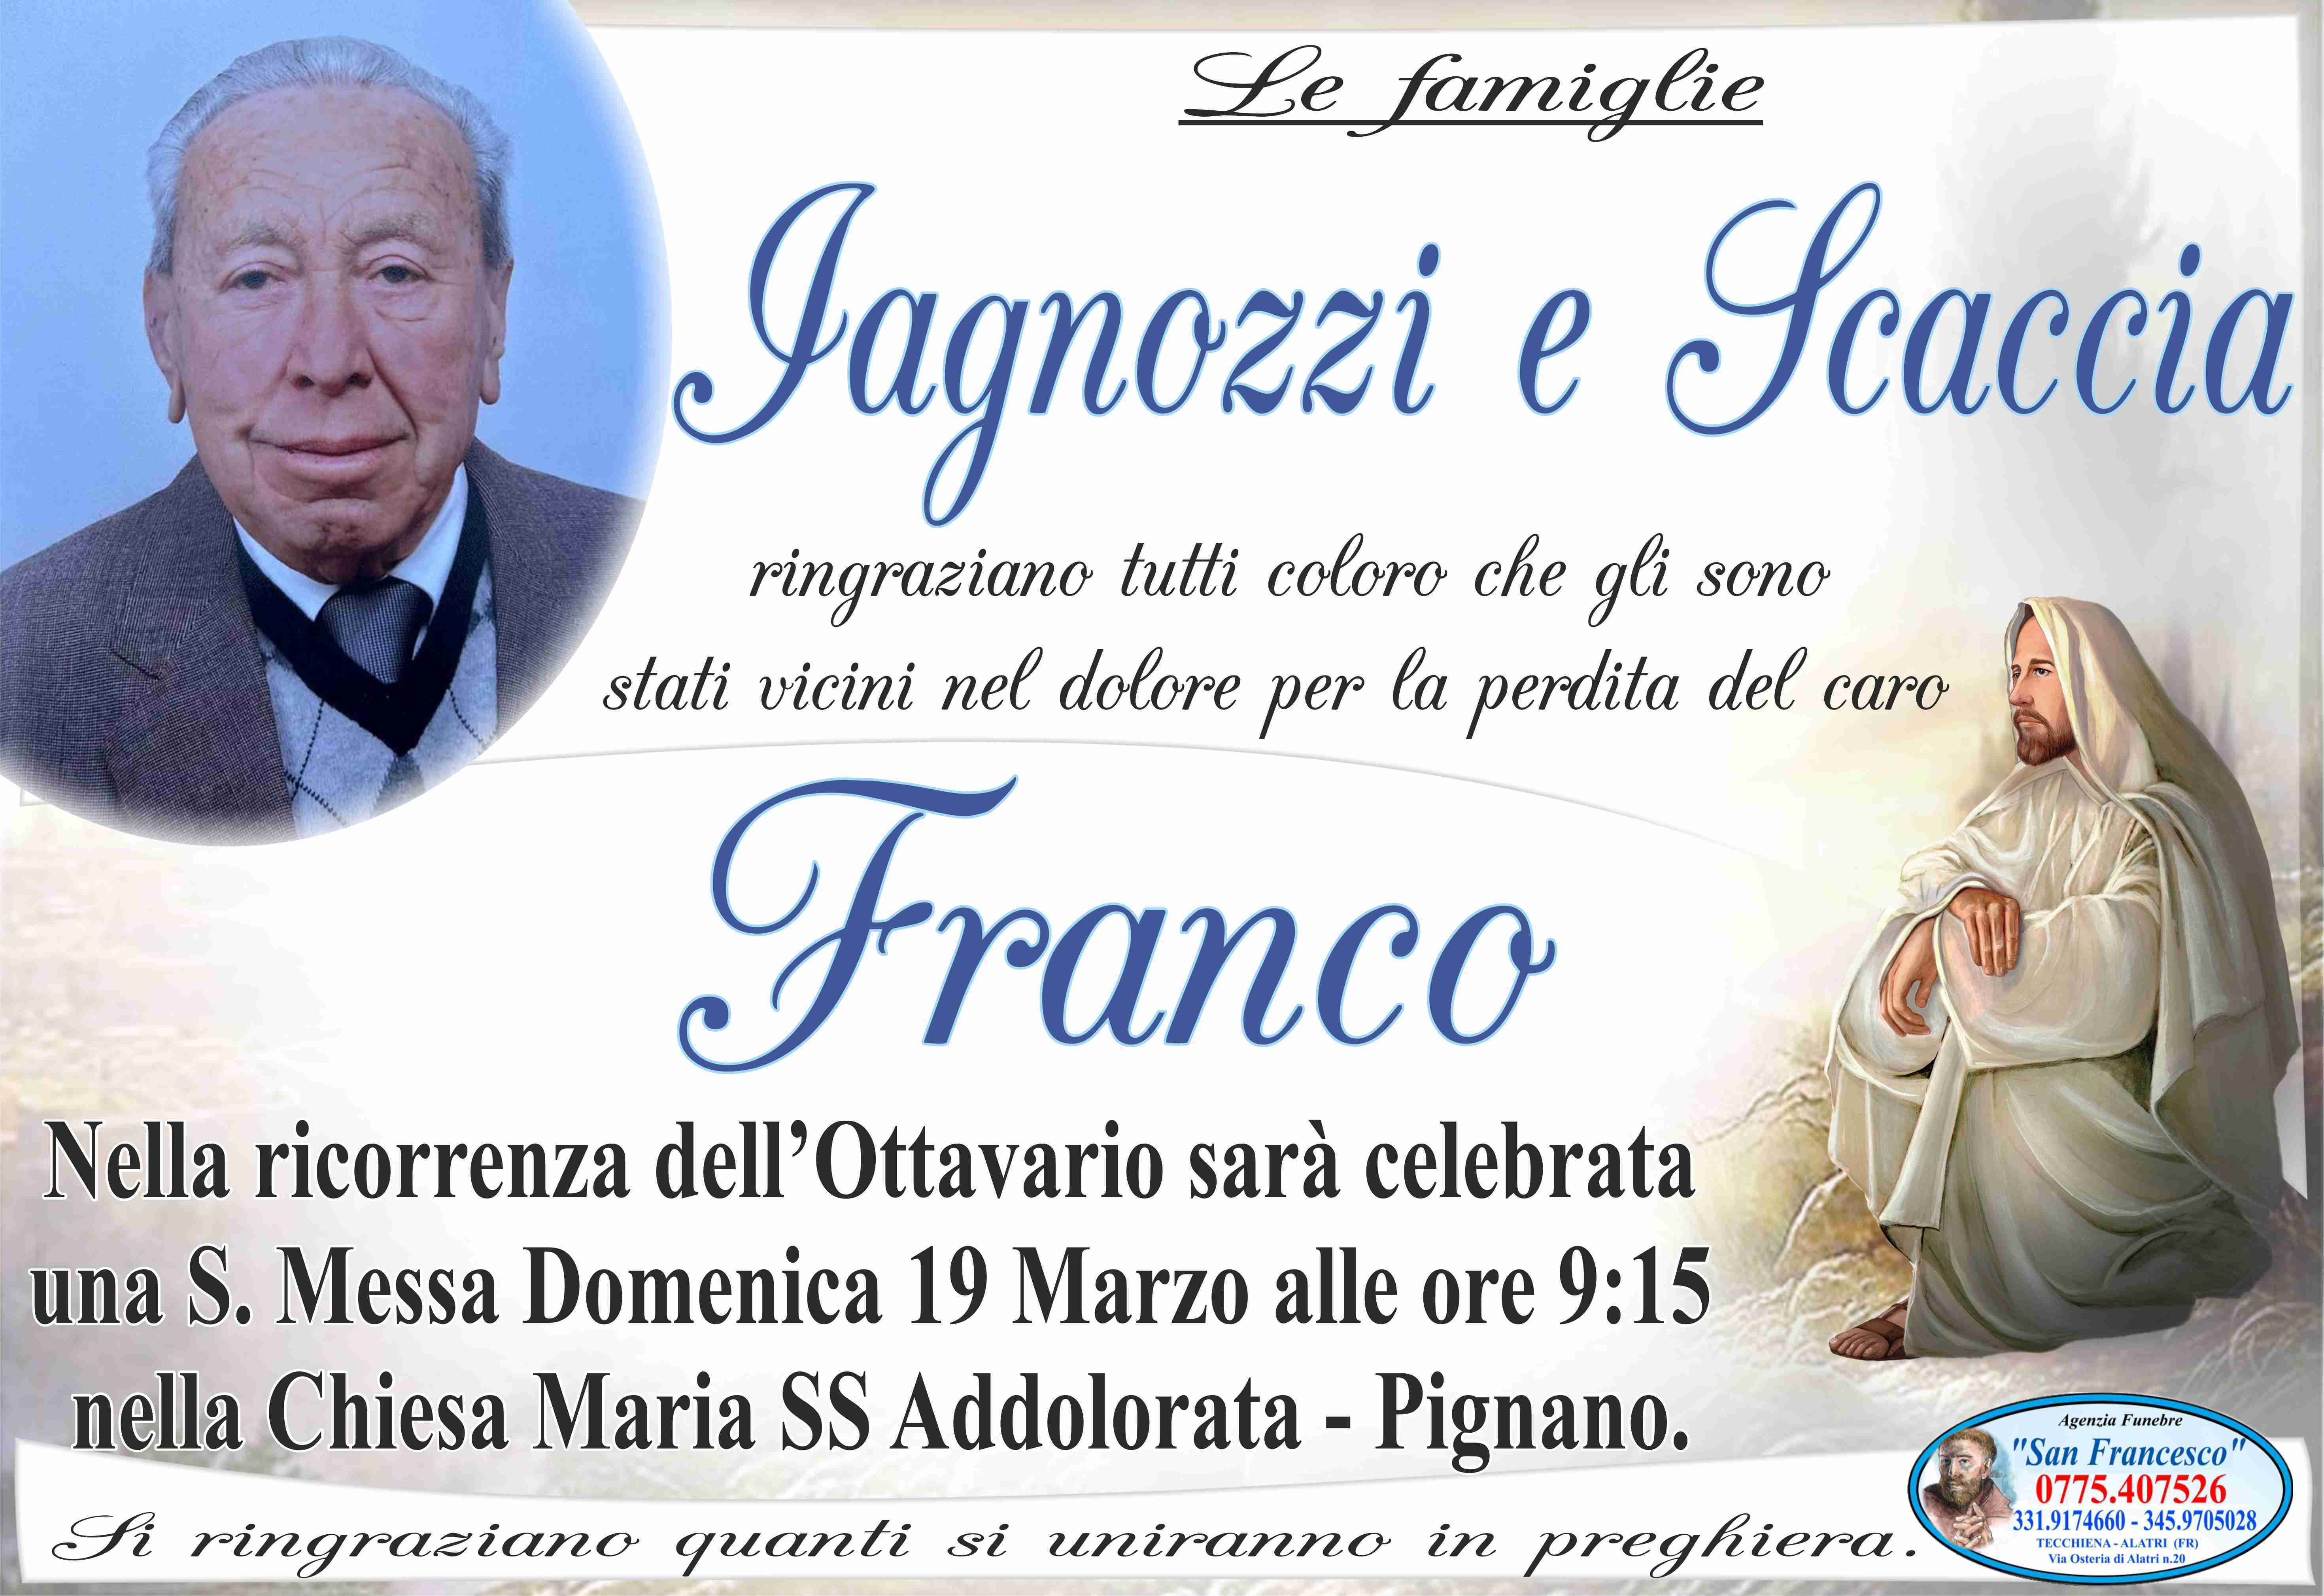 Franco Iagnozzi